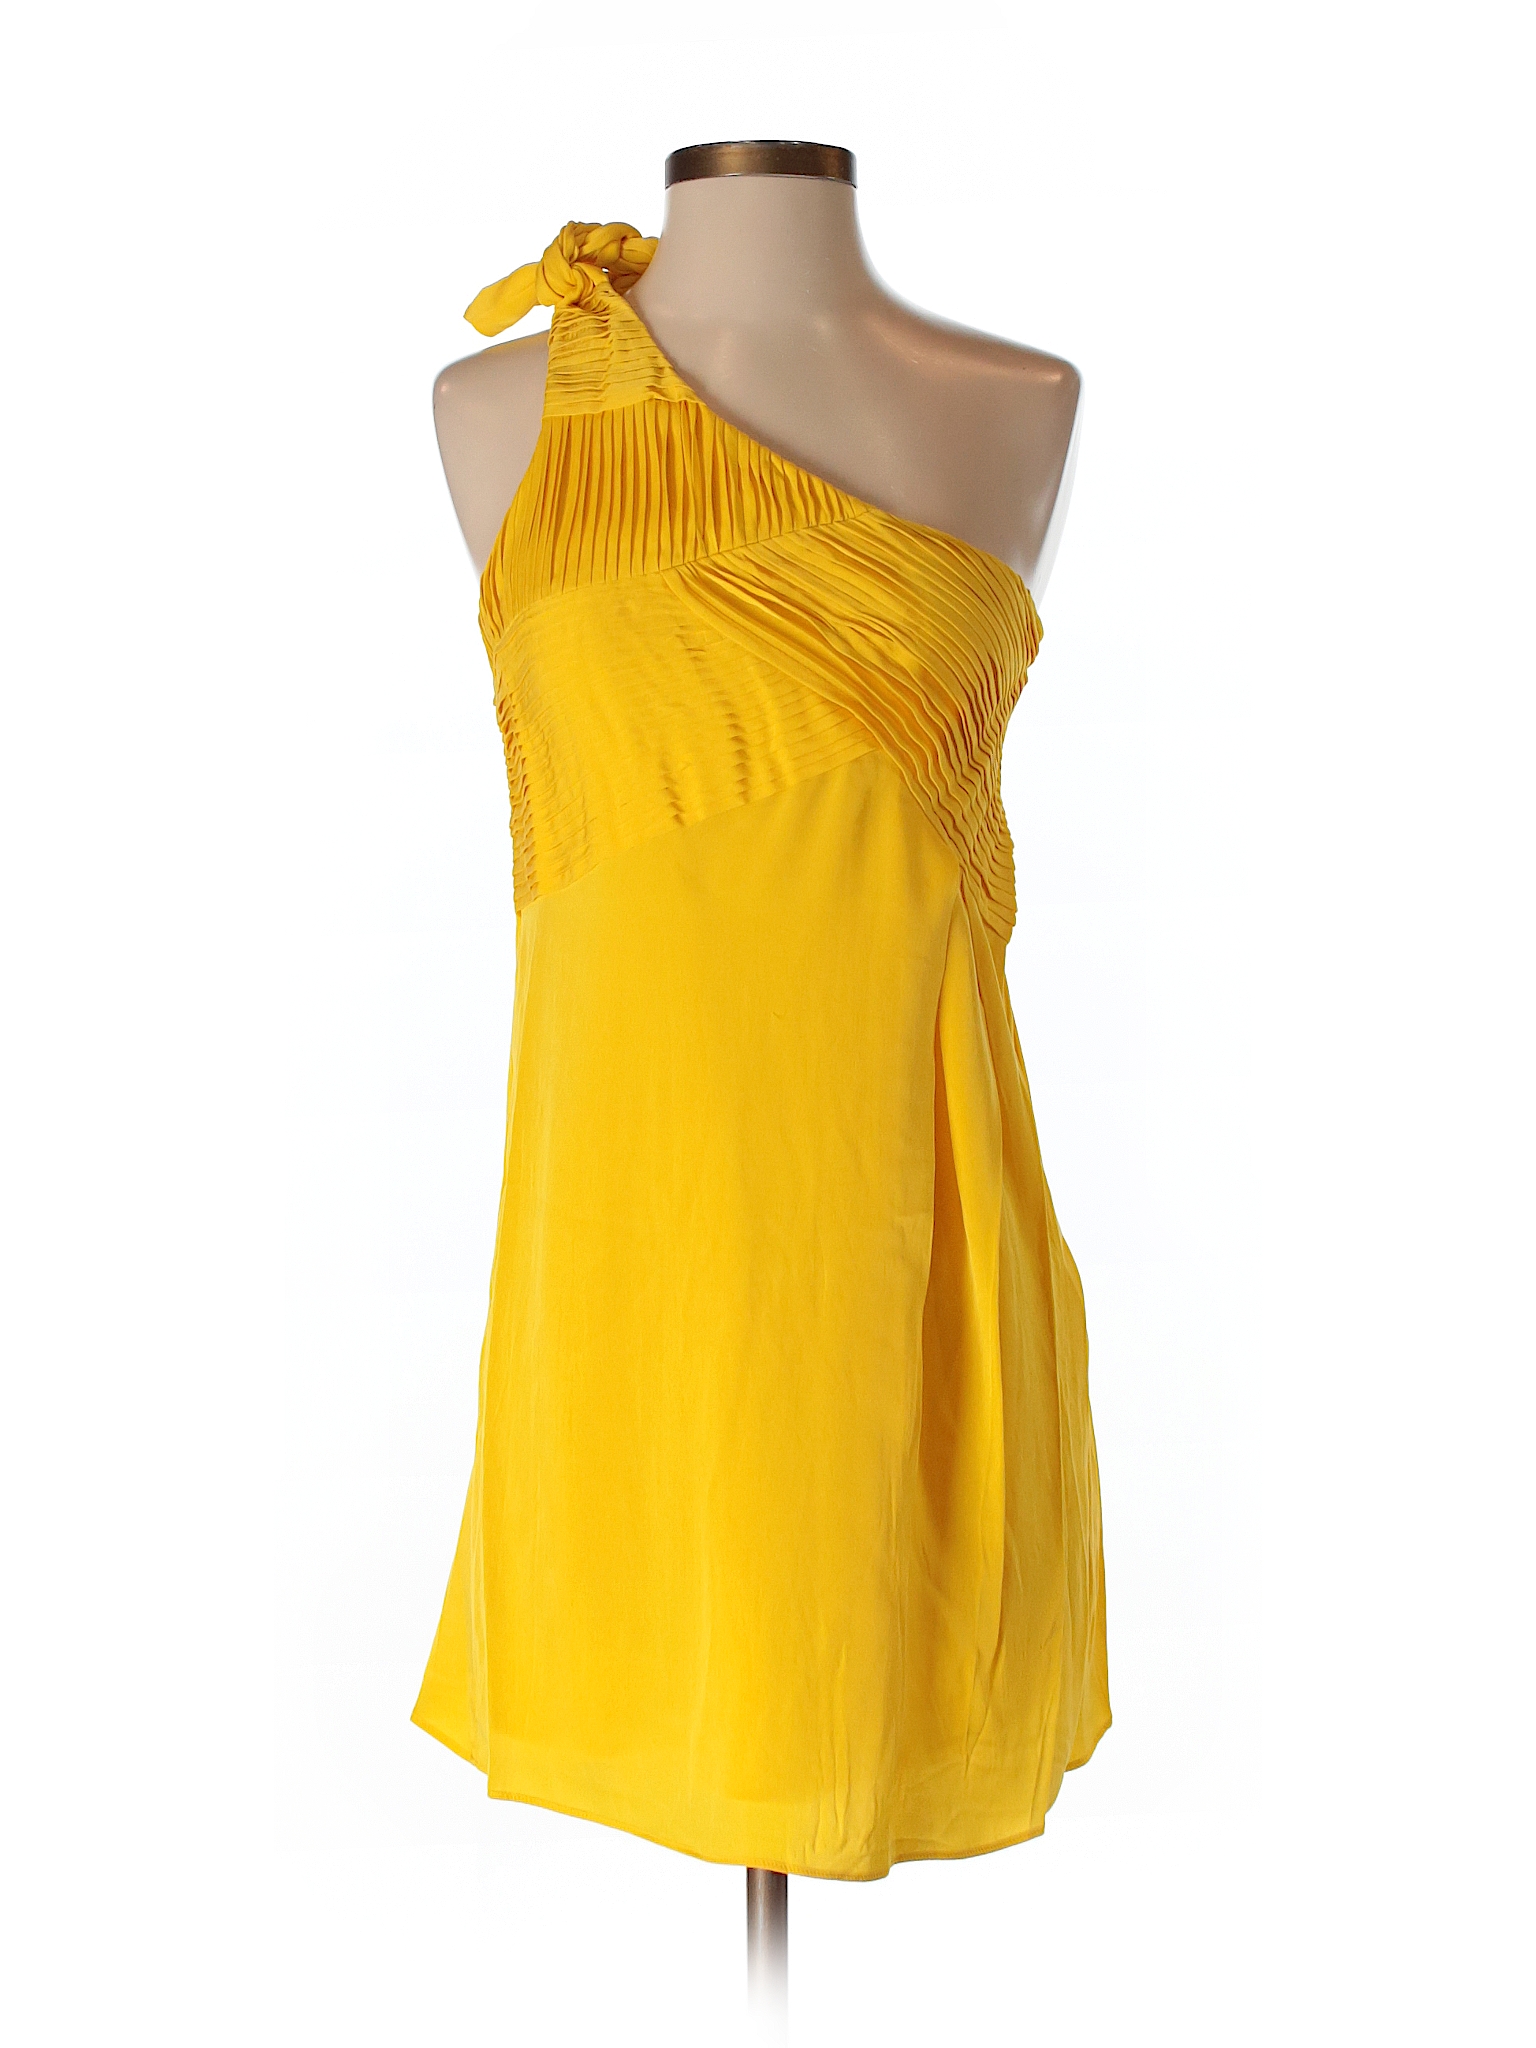 alice + olivia 100% Silk Solid Yellow Silk Dress Size S - 95% off | thredUP